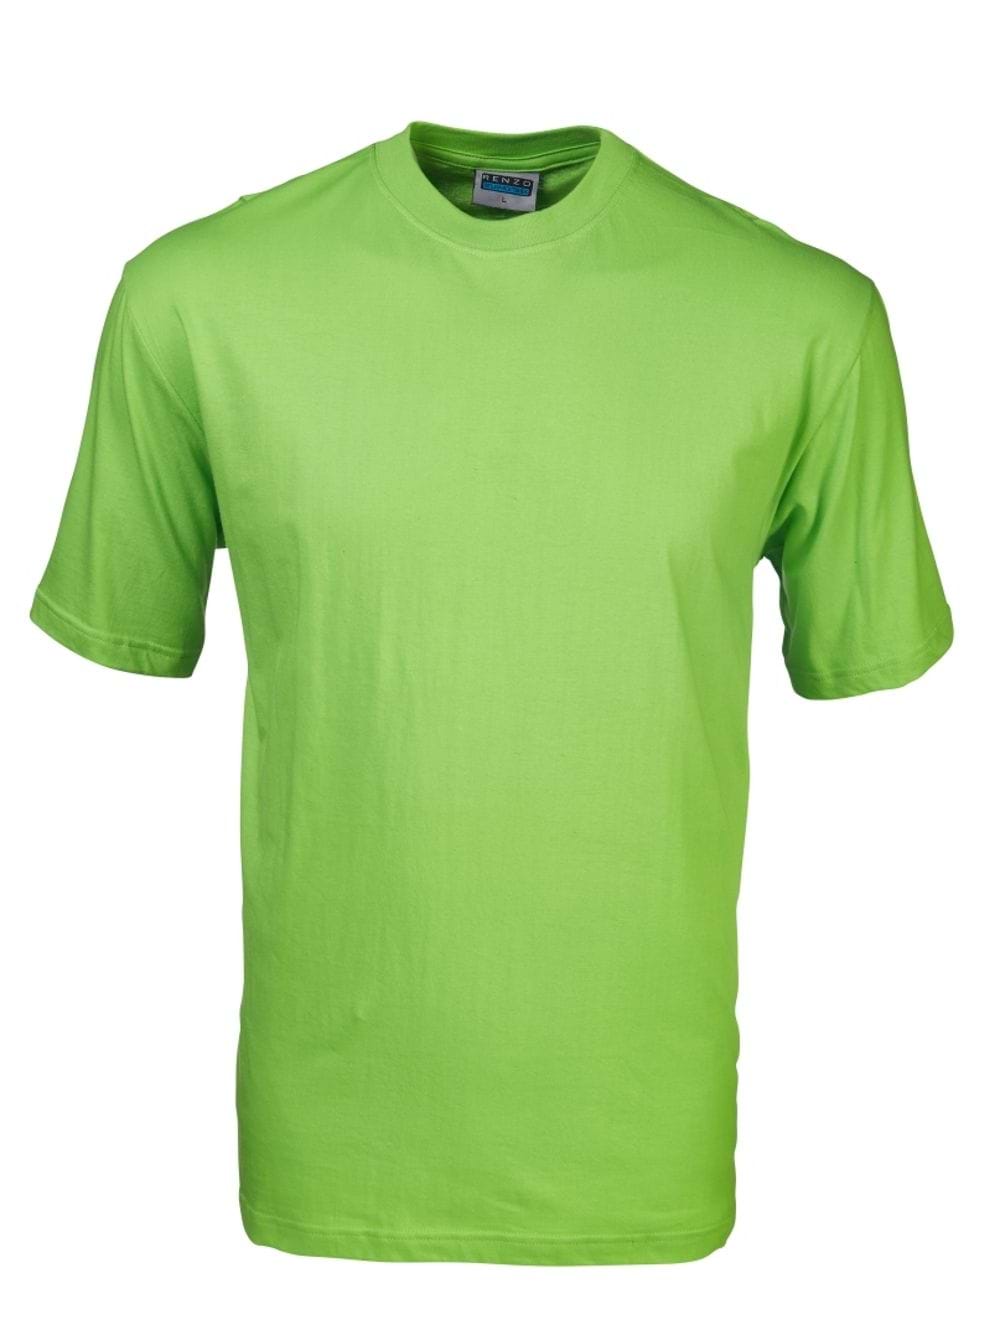 165G Crew Neck T-Shirt - Lime Green / SS